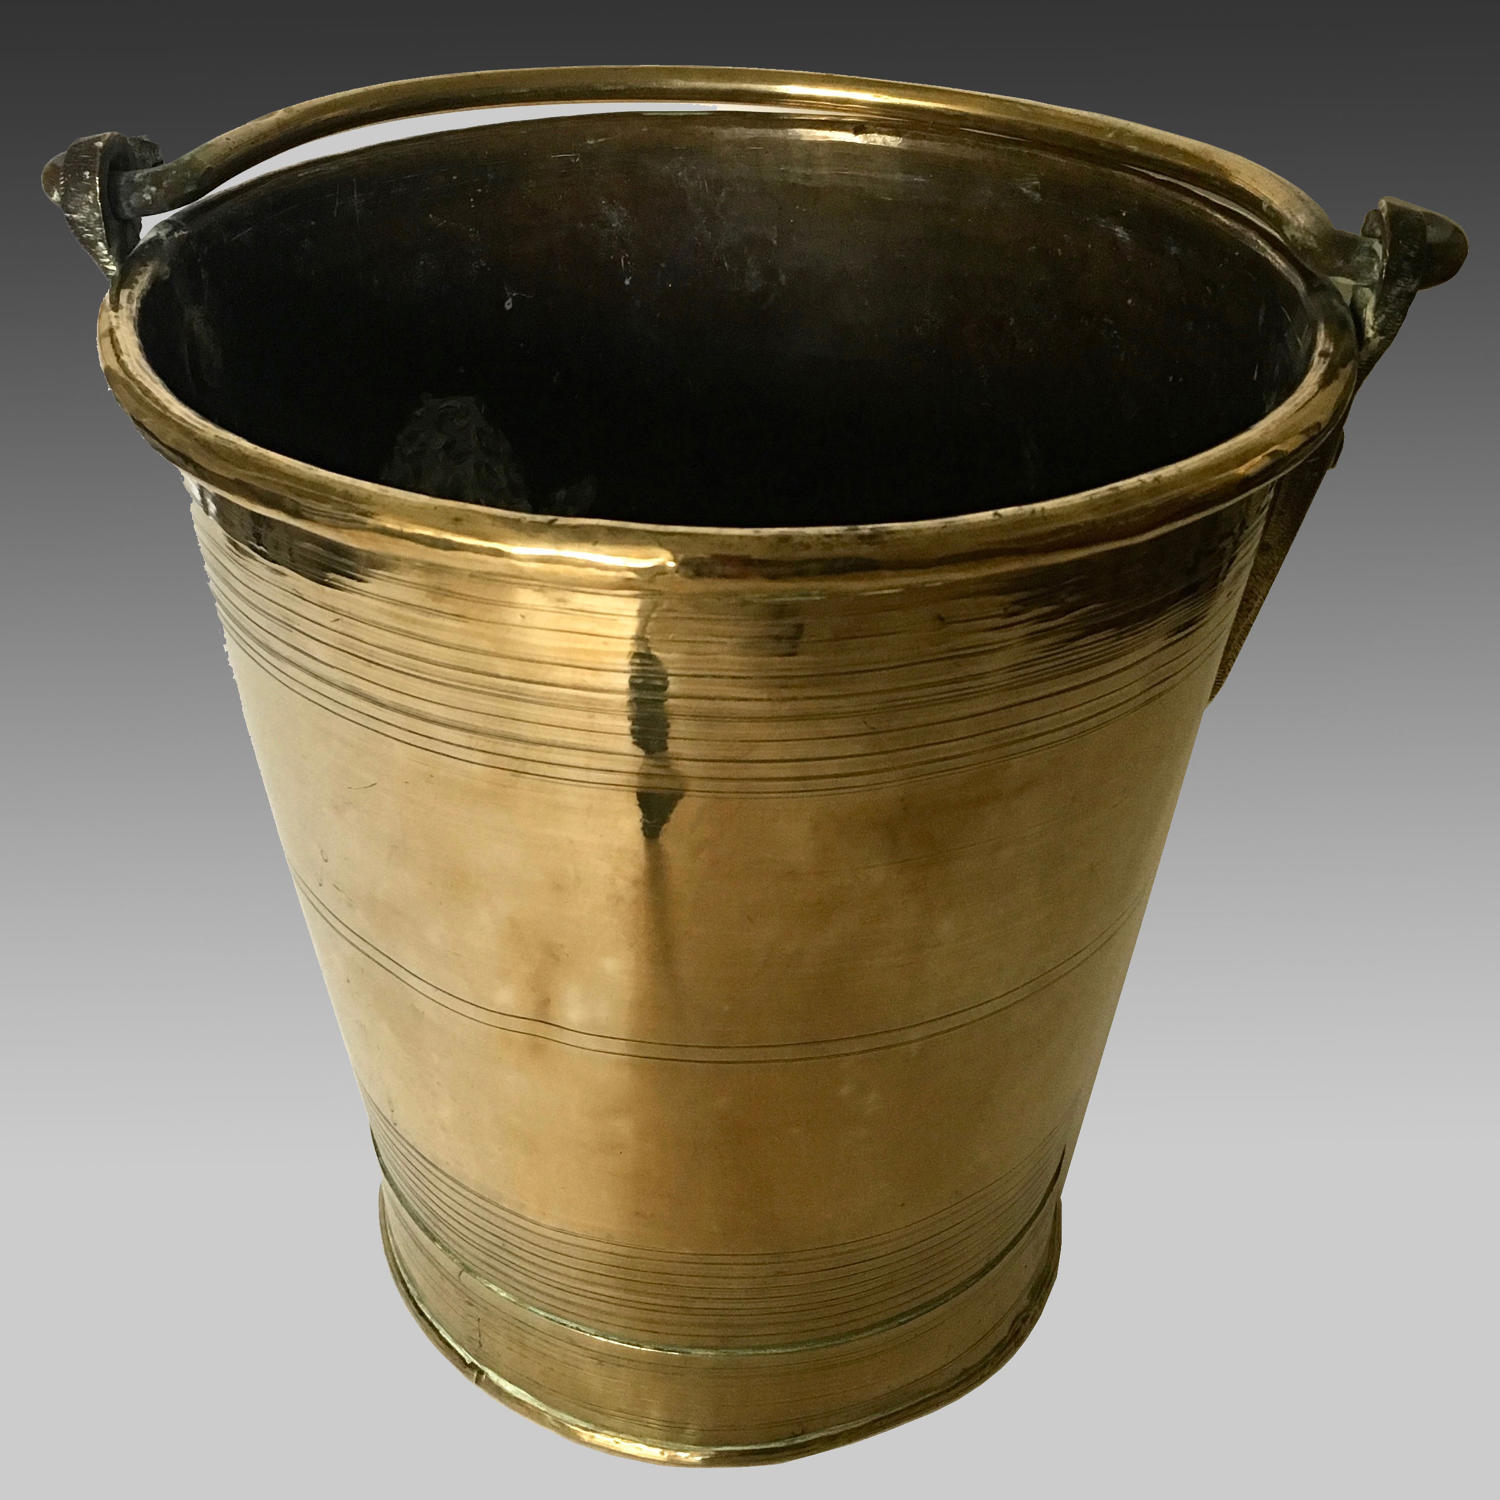 Late 19th century brass bucket